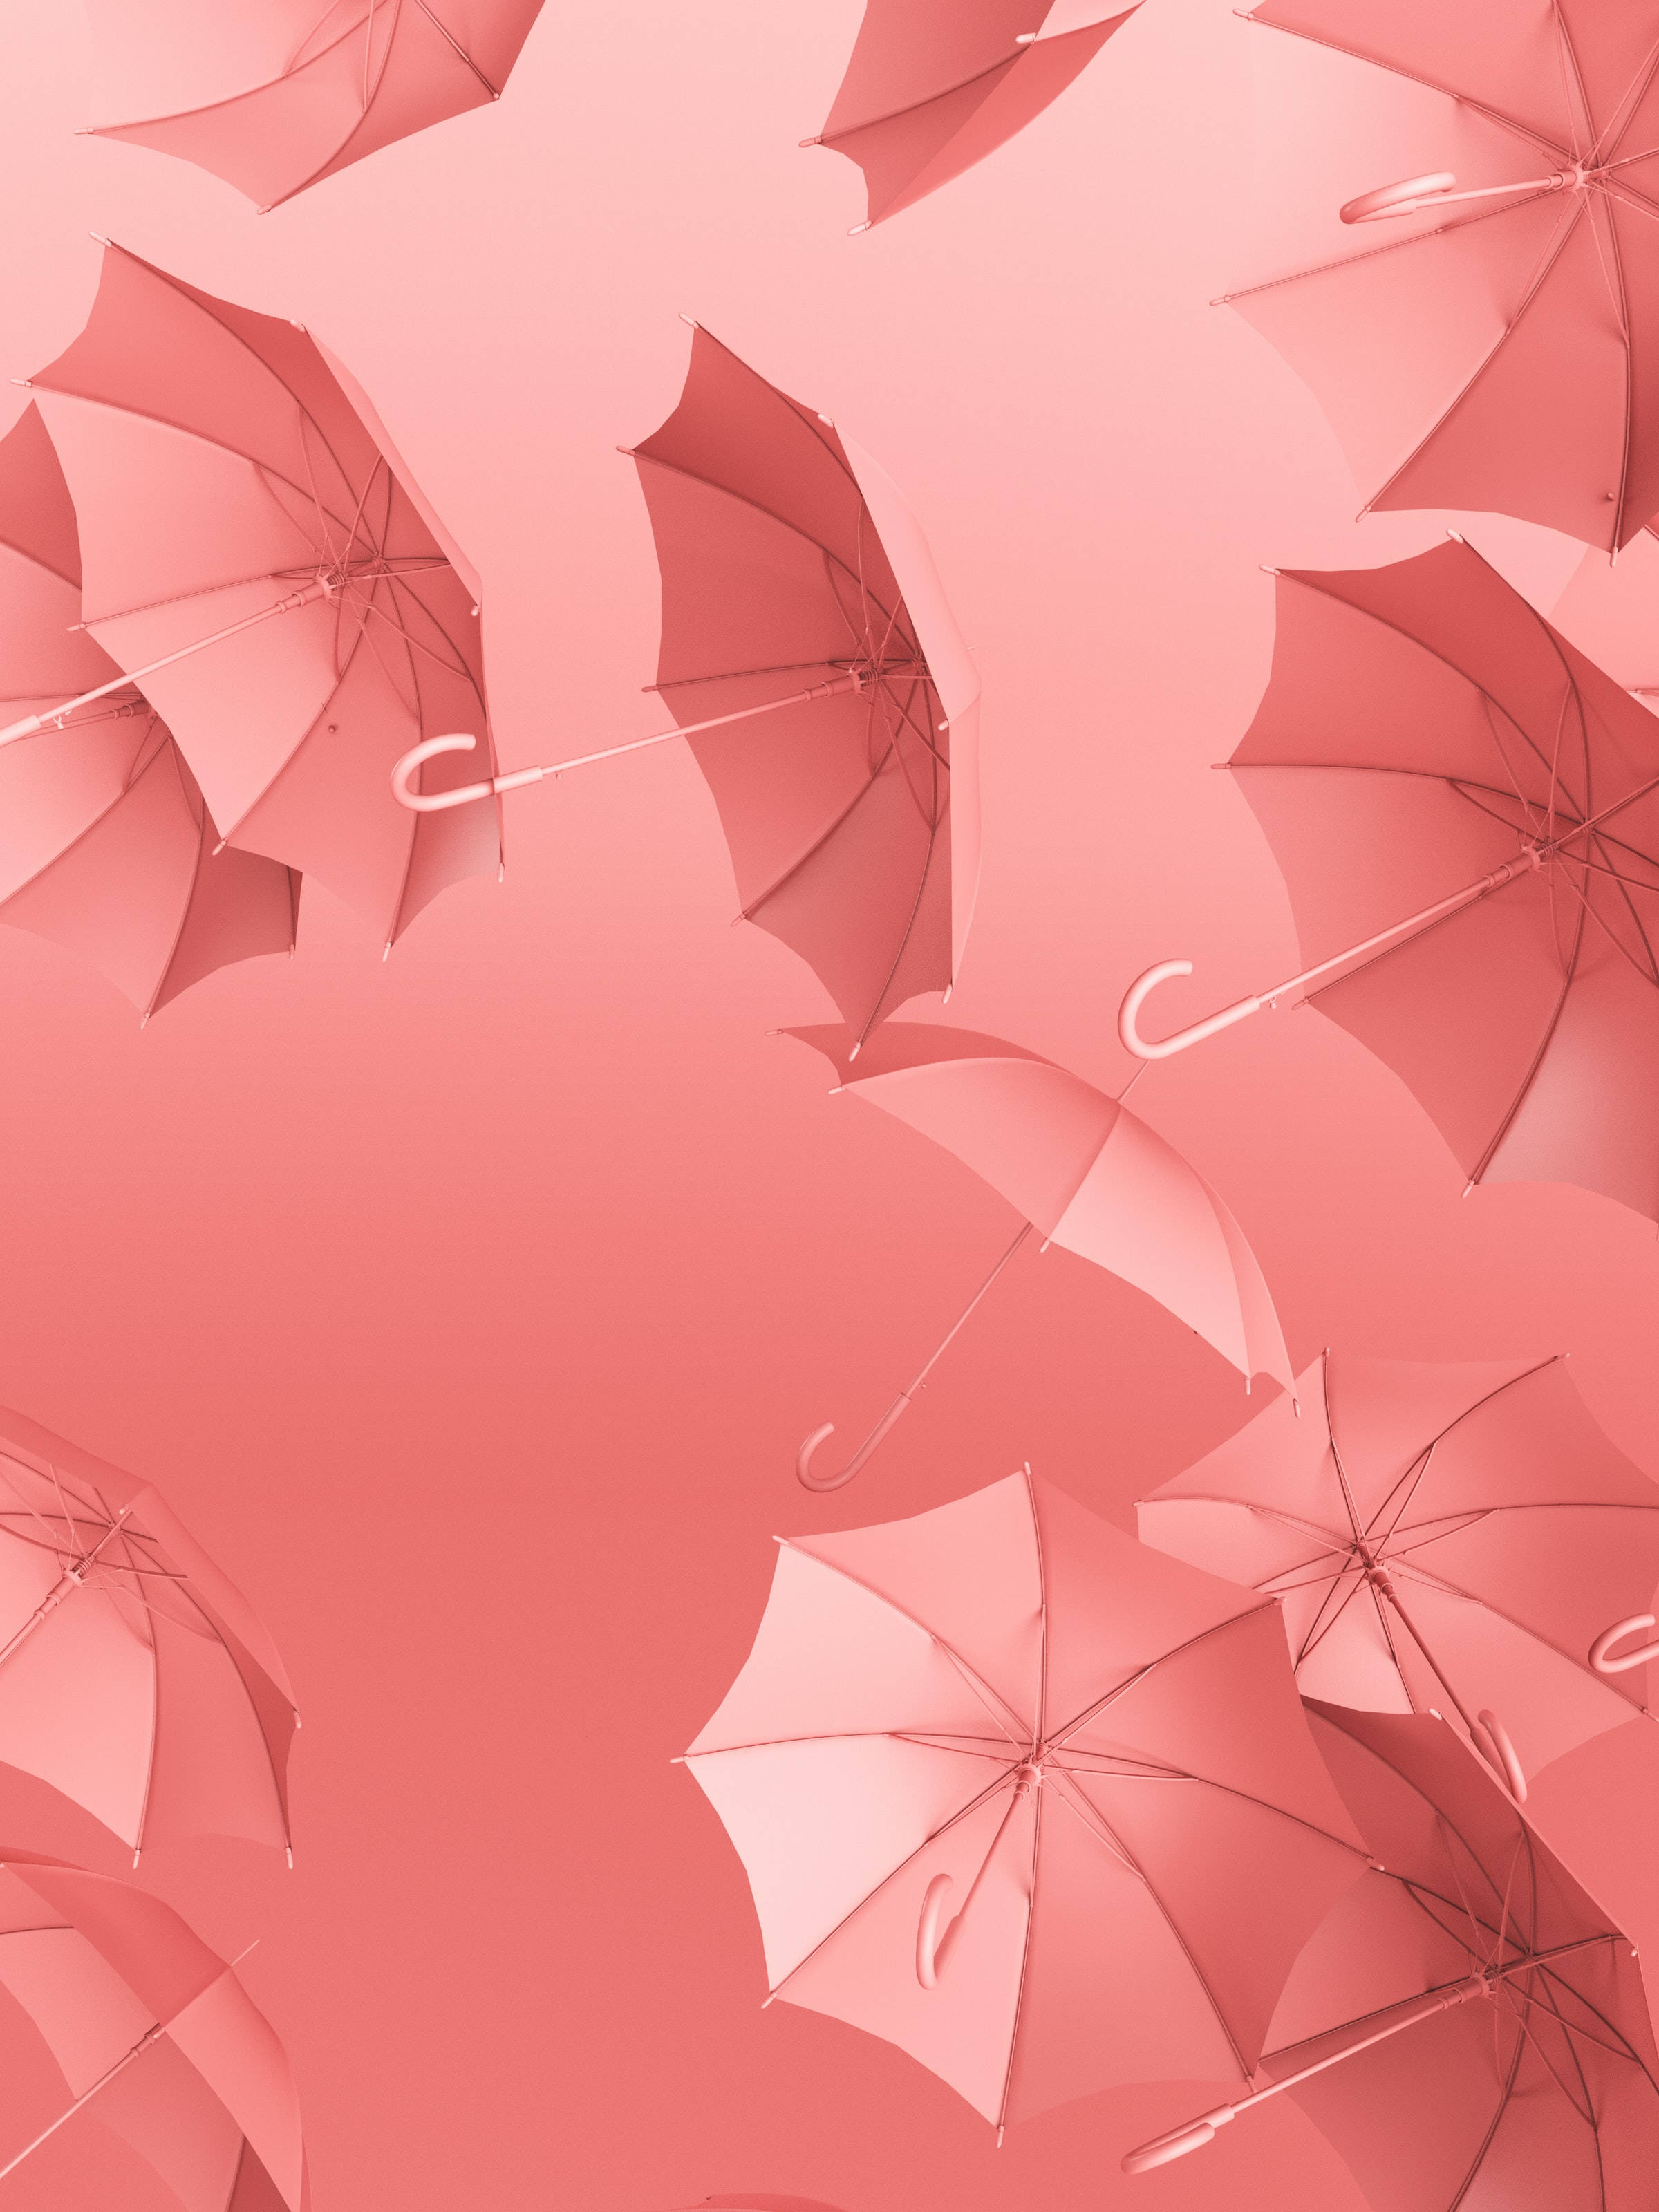 Cute Pink Aesthetic Floating Umbrellas